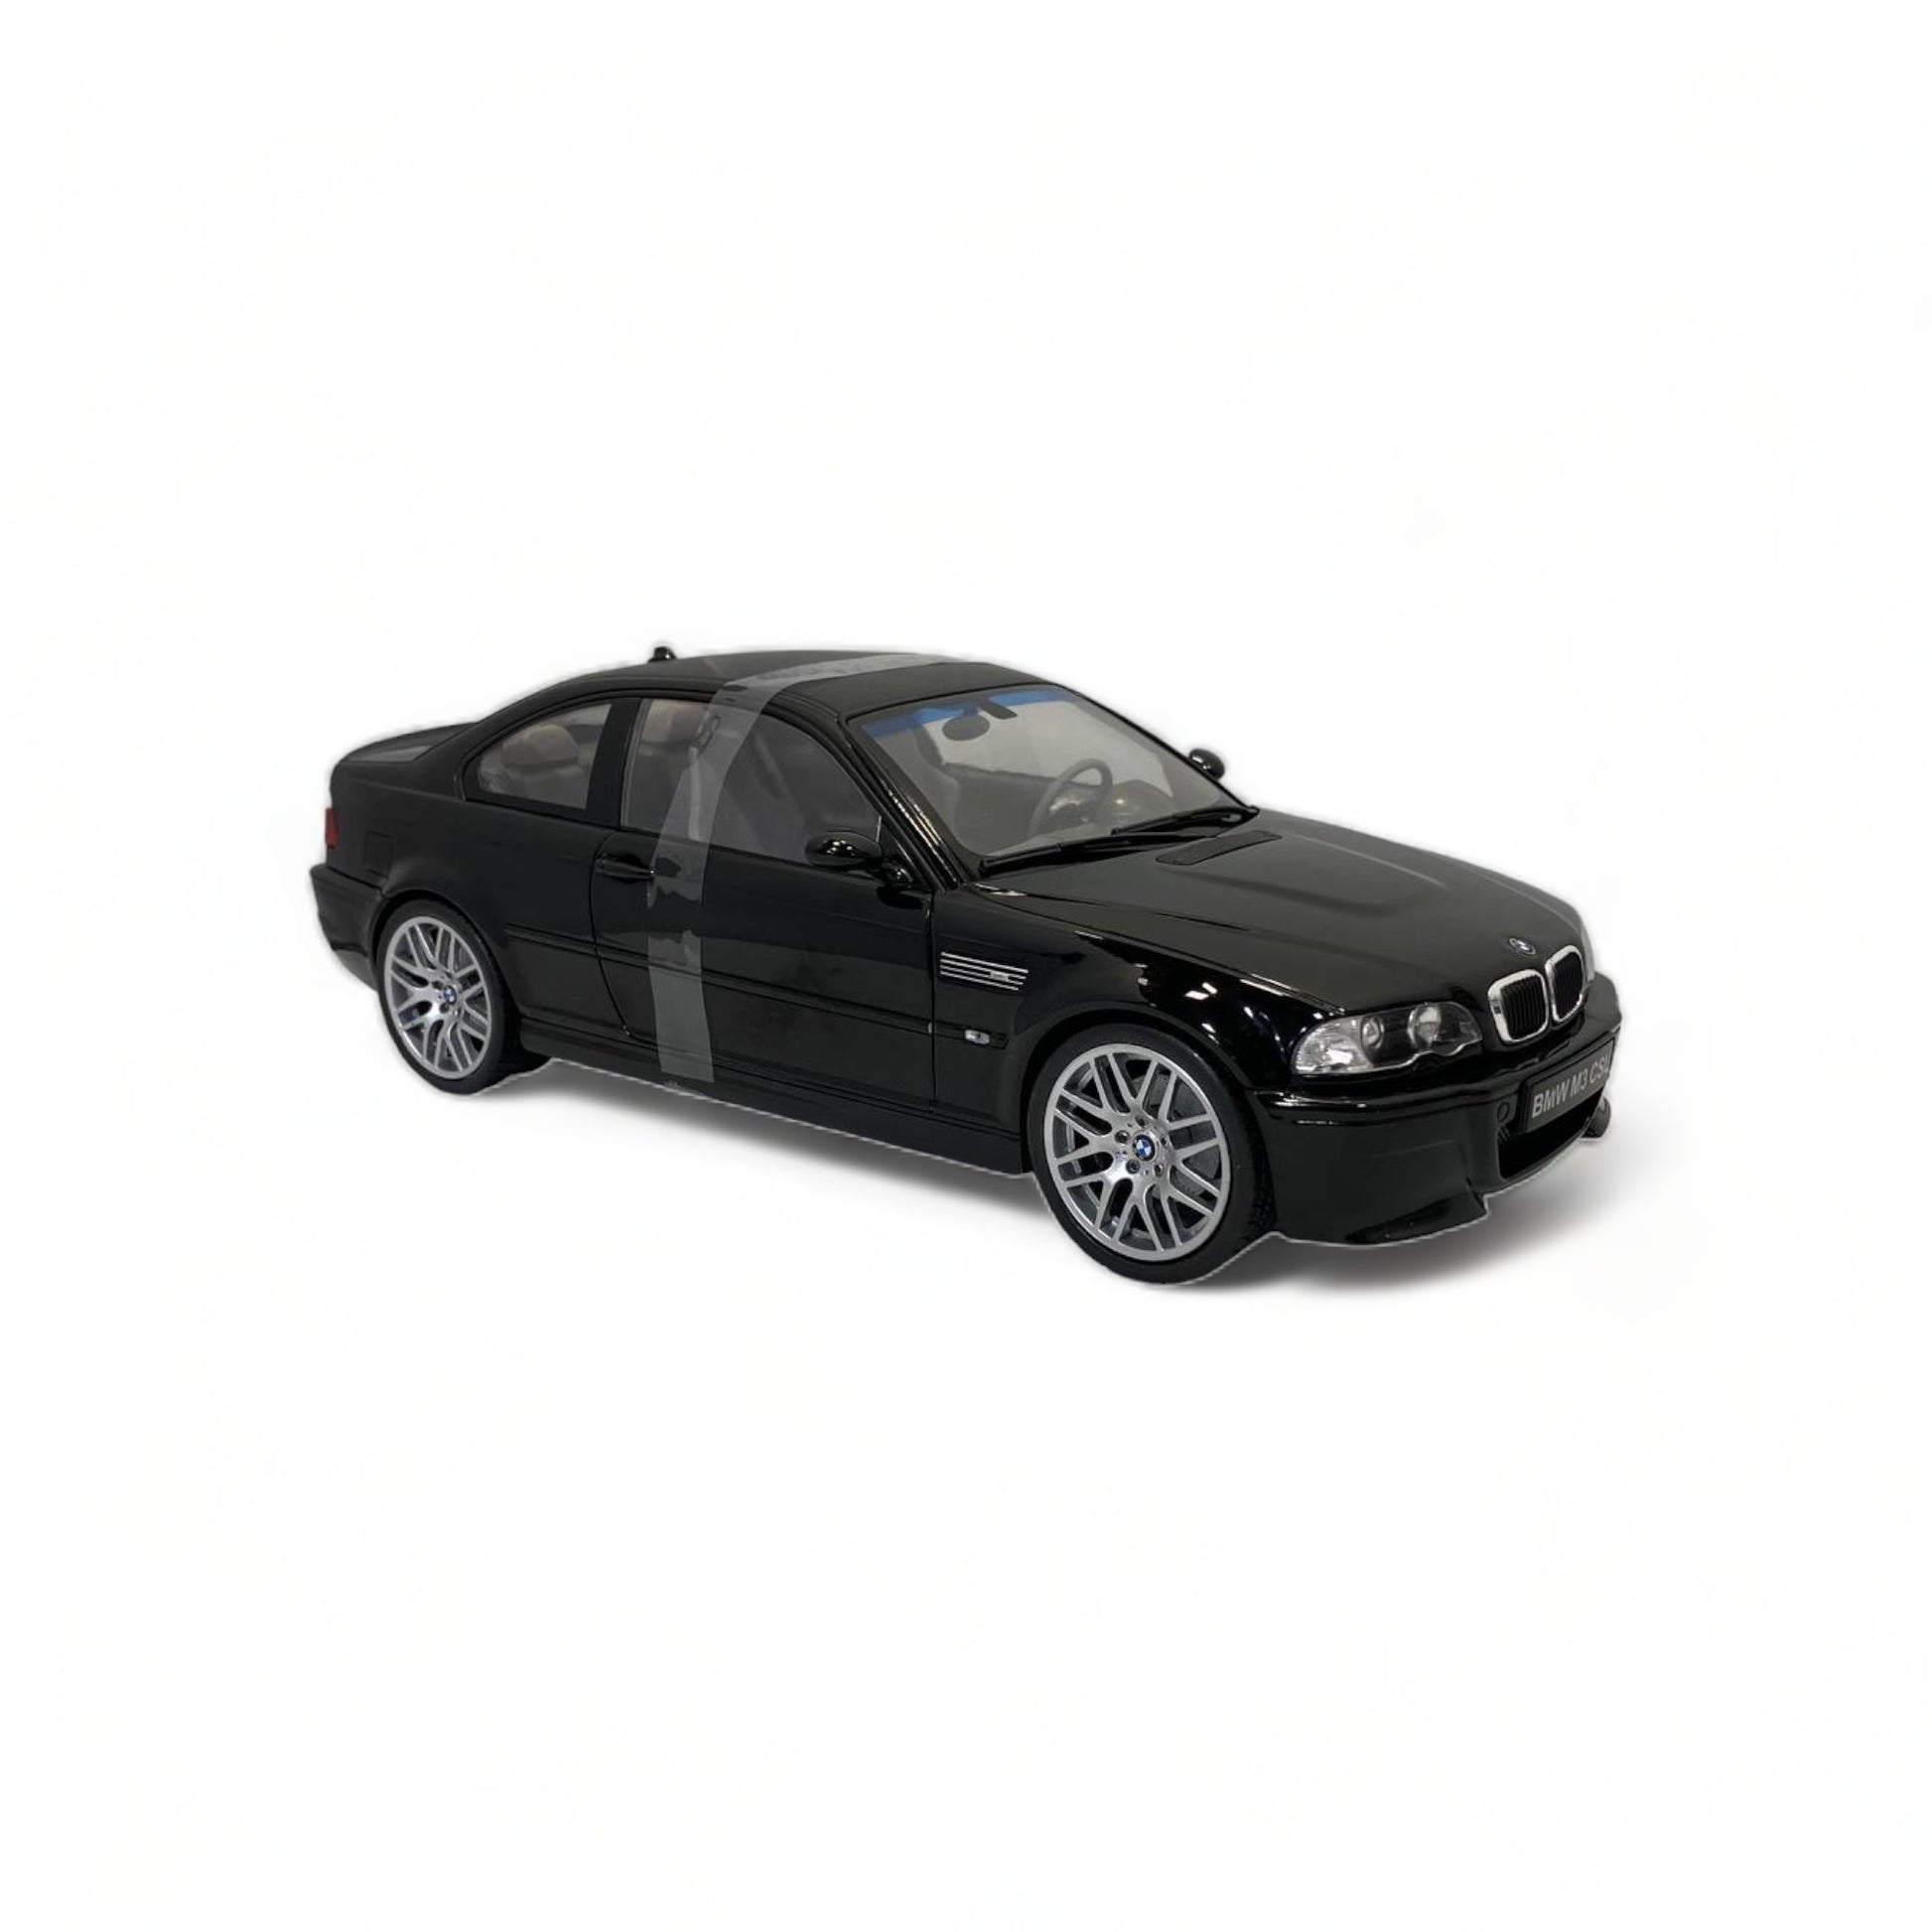 1/18 Solido BMW E46 CSL (2003) - Metal Diecast, Sleek Black|Sold in Dturman.com Dubai UAE.